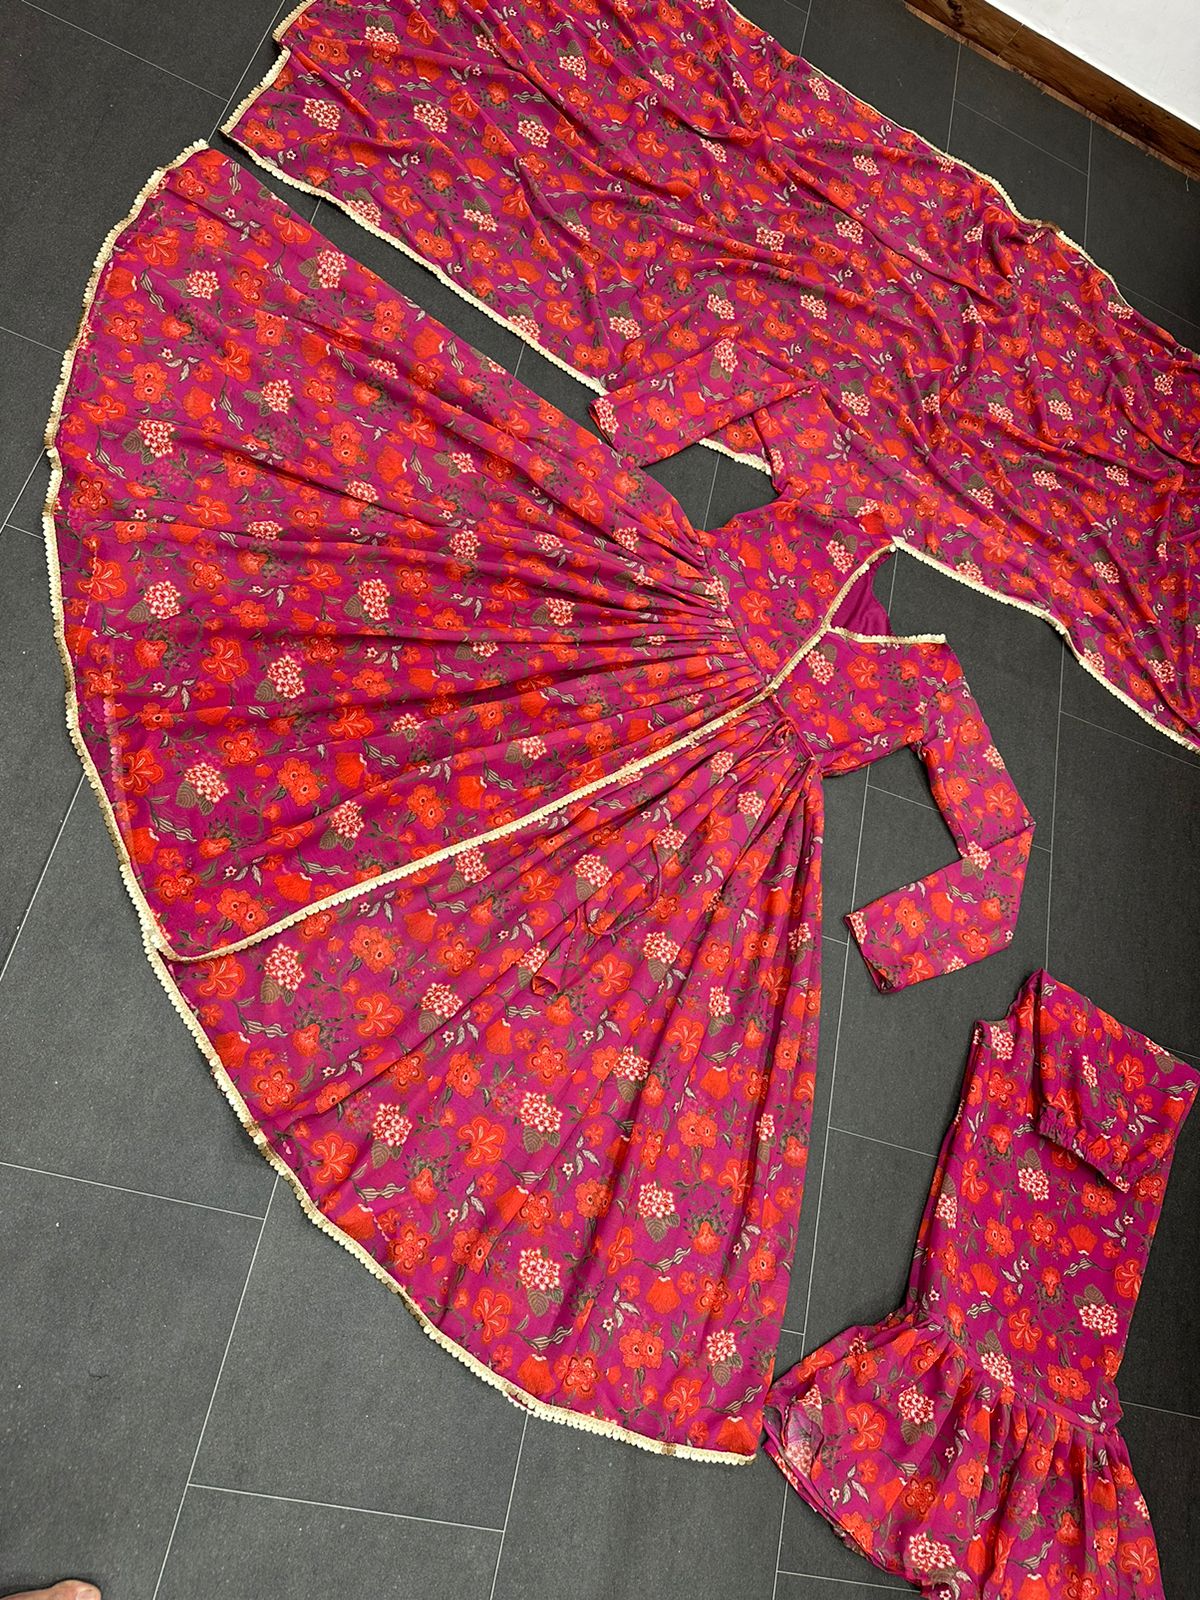 Aggregate 84+ umbrella gown cutting stitching latest